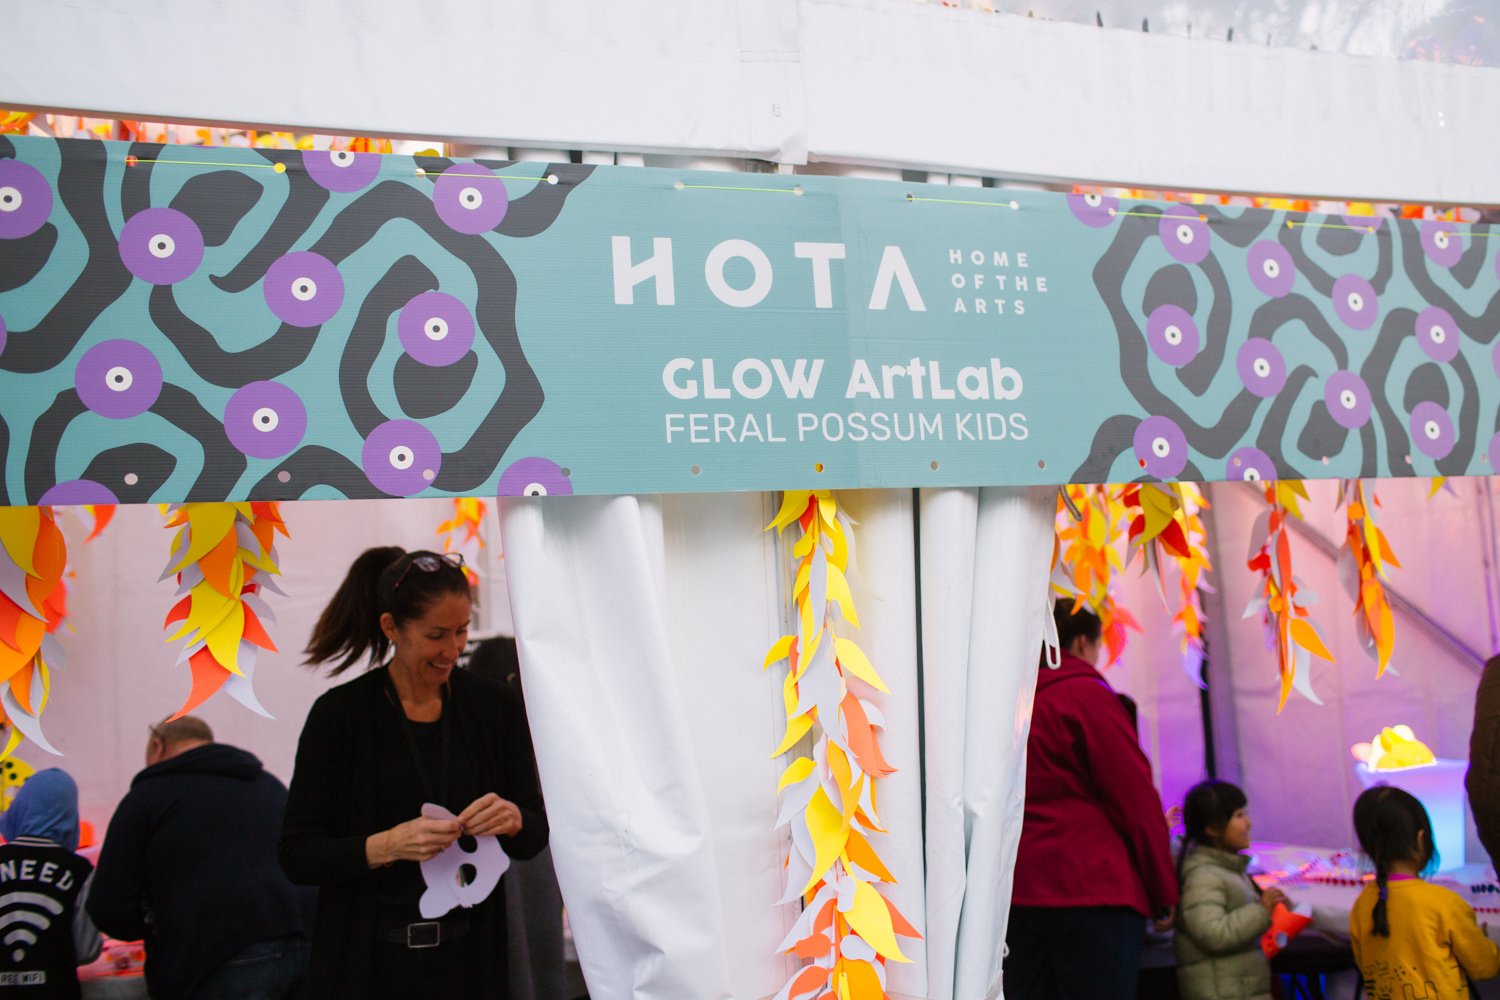 GLOW festival at HOTA